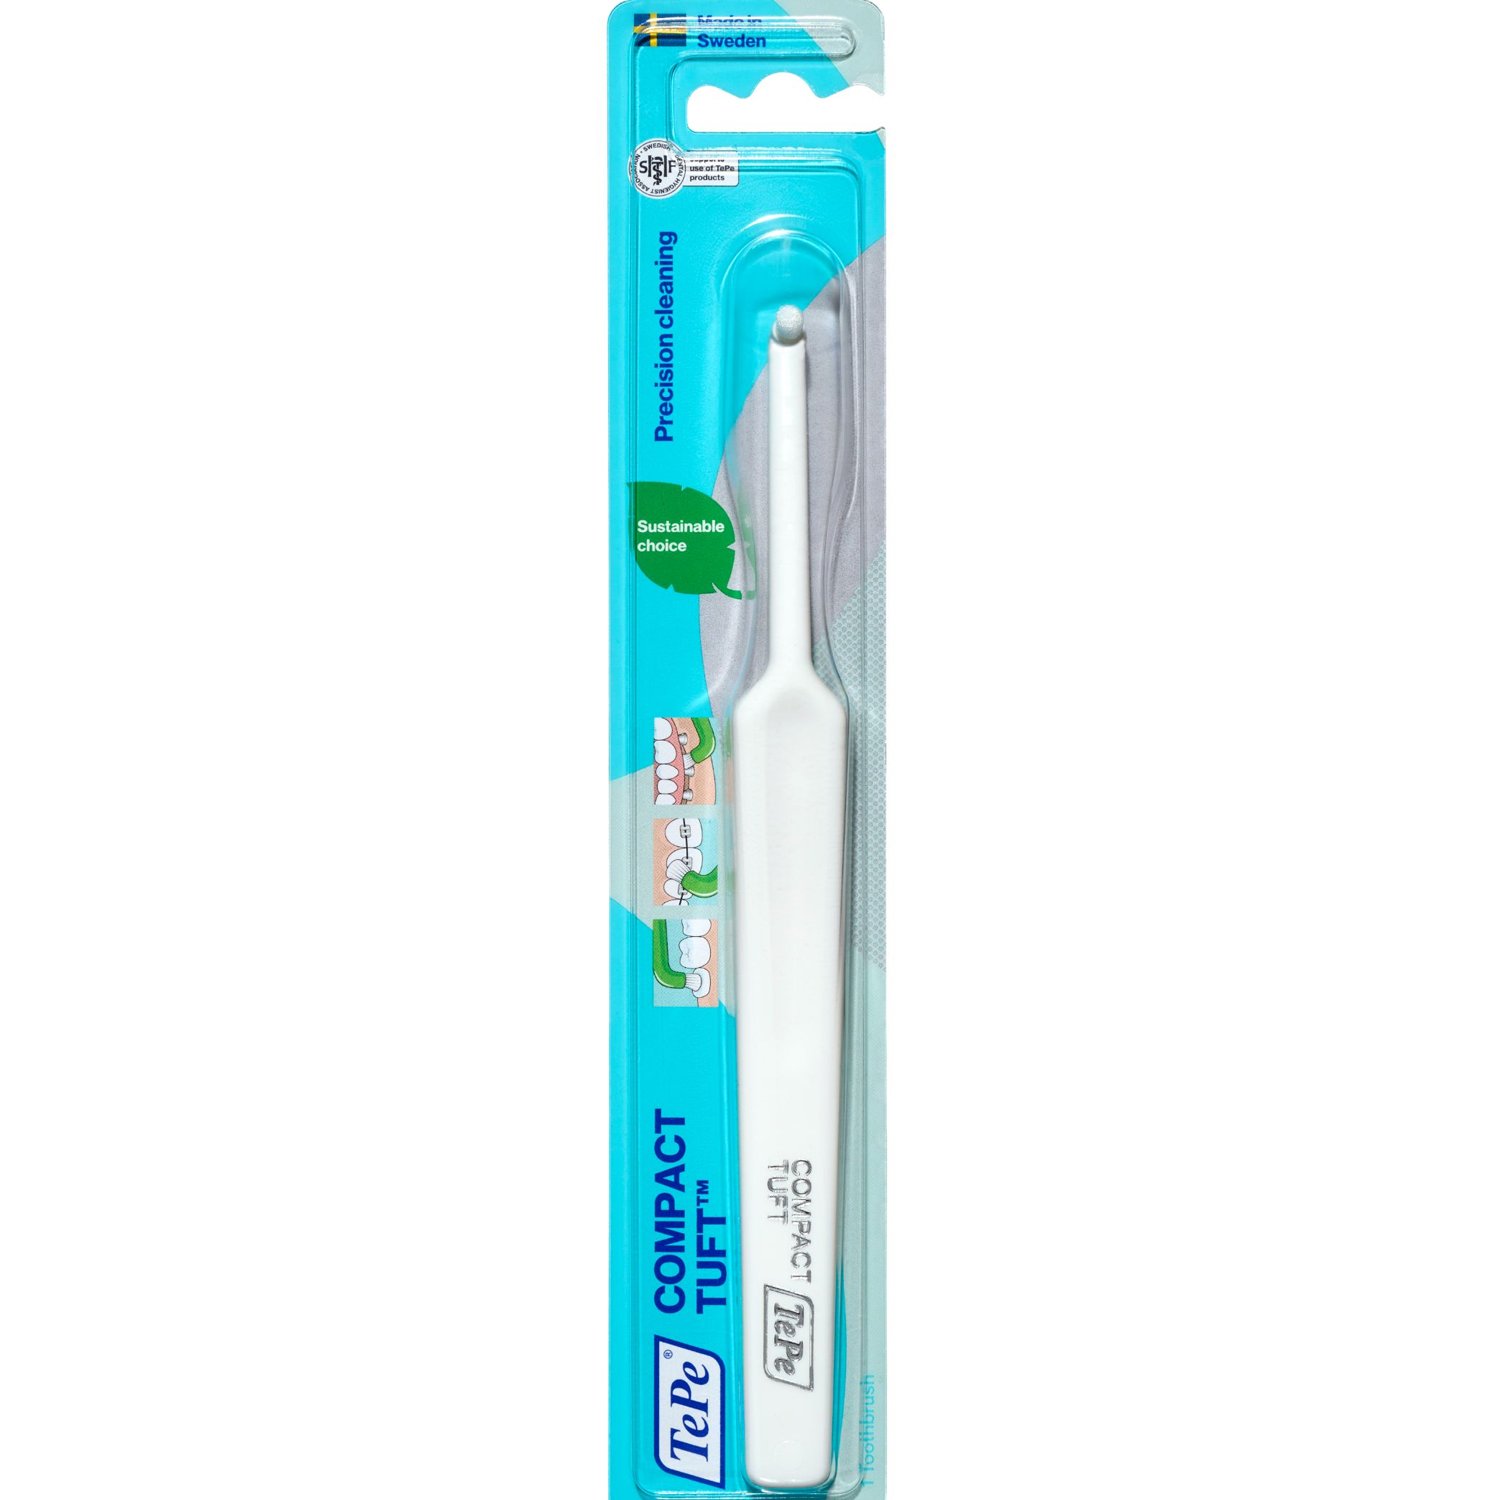 Tepe Compact Tuft Toothbrush Λευκό Ειδική Οδοντόβουρτσα Ιδανική για Καθαρισμό Κατά Μήκος της Γραμμής των Ούλων & Δυσπρόσιτων Περιοχών 1 Τεμάχιο